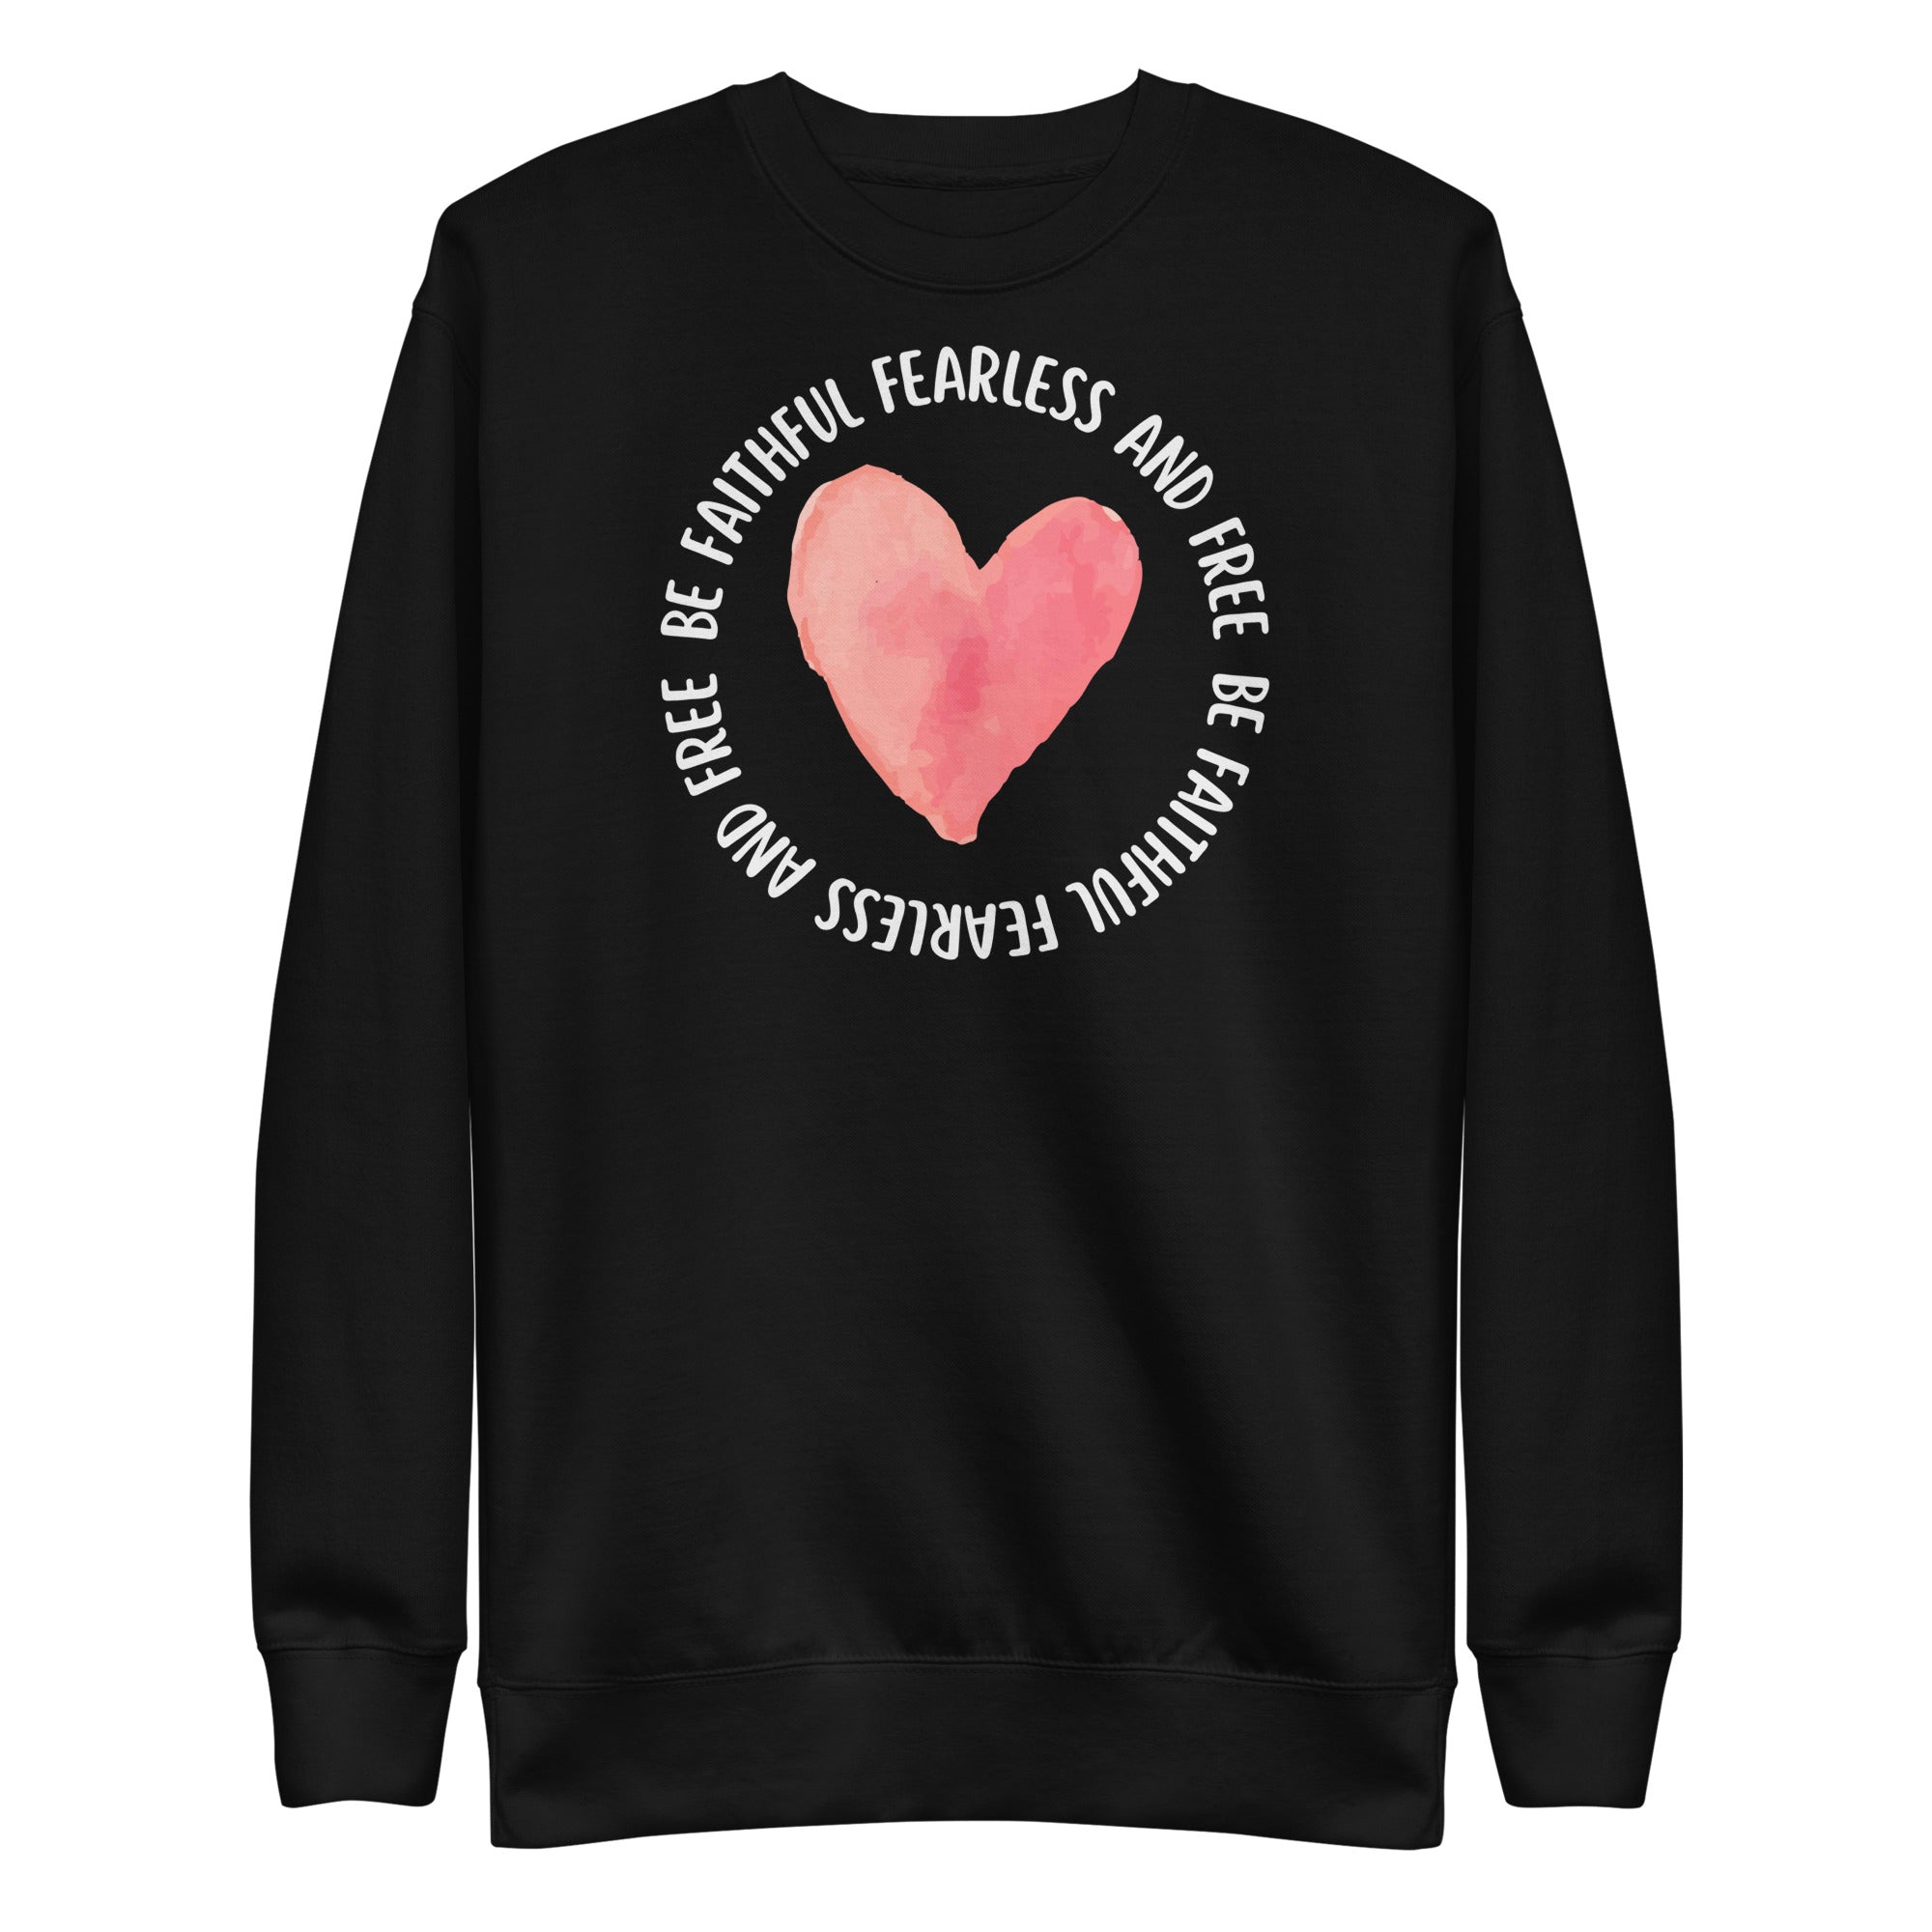 Be Faithful Fearless and Free Unisex Premium Sweatshirt